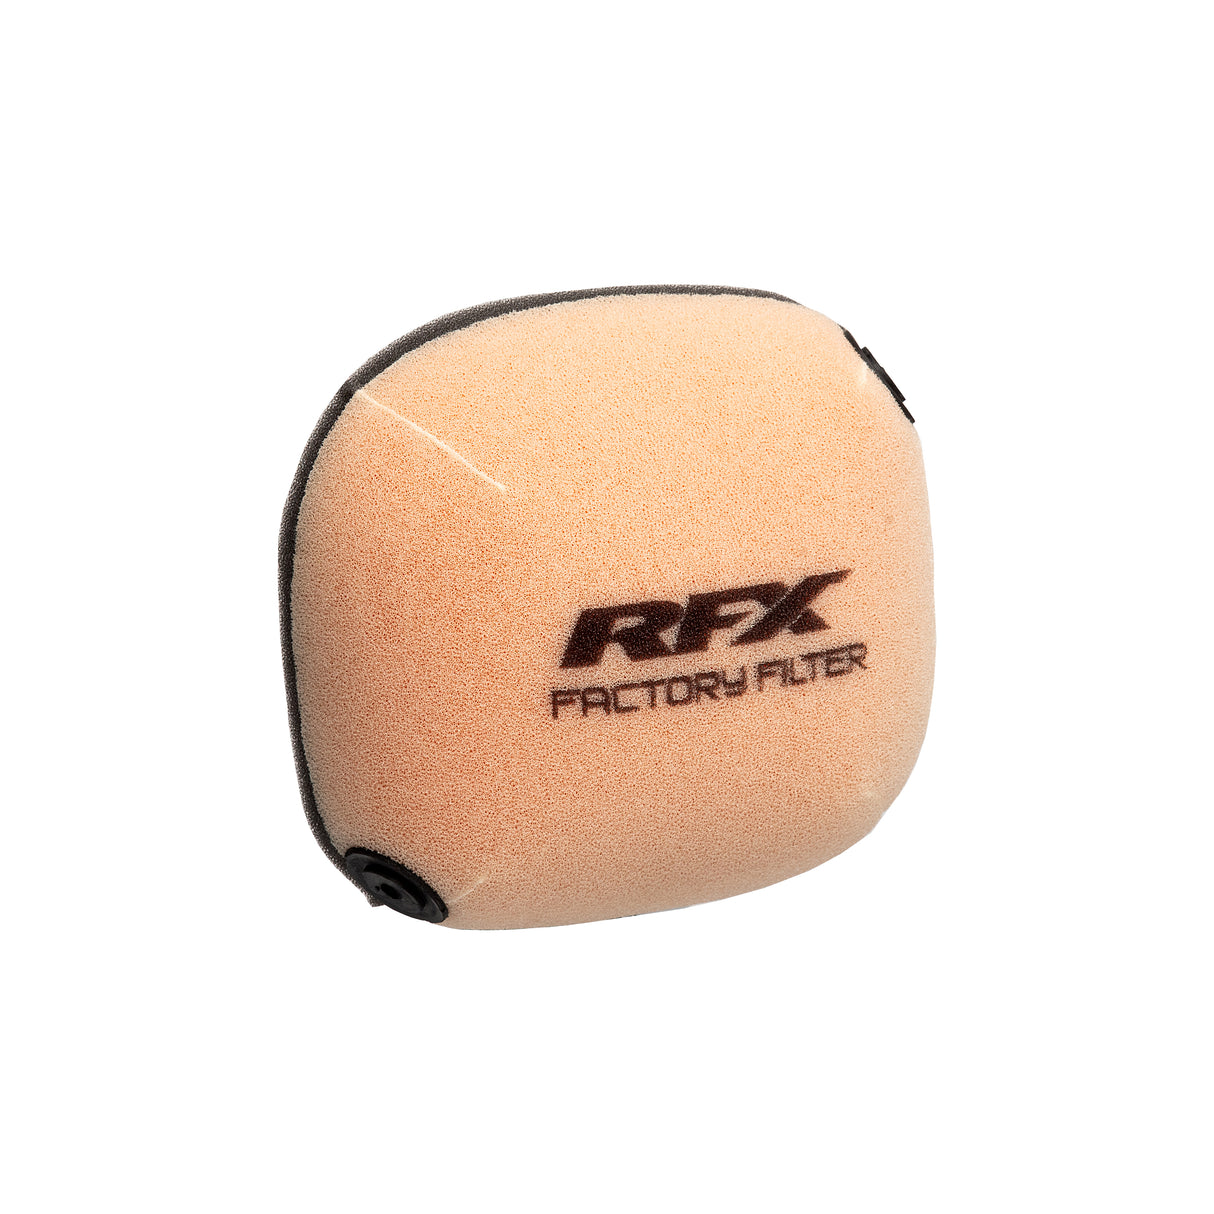 RFX Race Air Filter (Non Oiled) Beta Evo 2T/4T 09-22